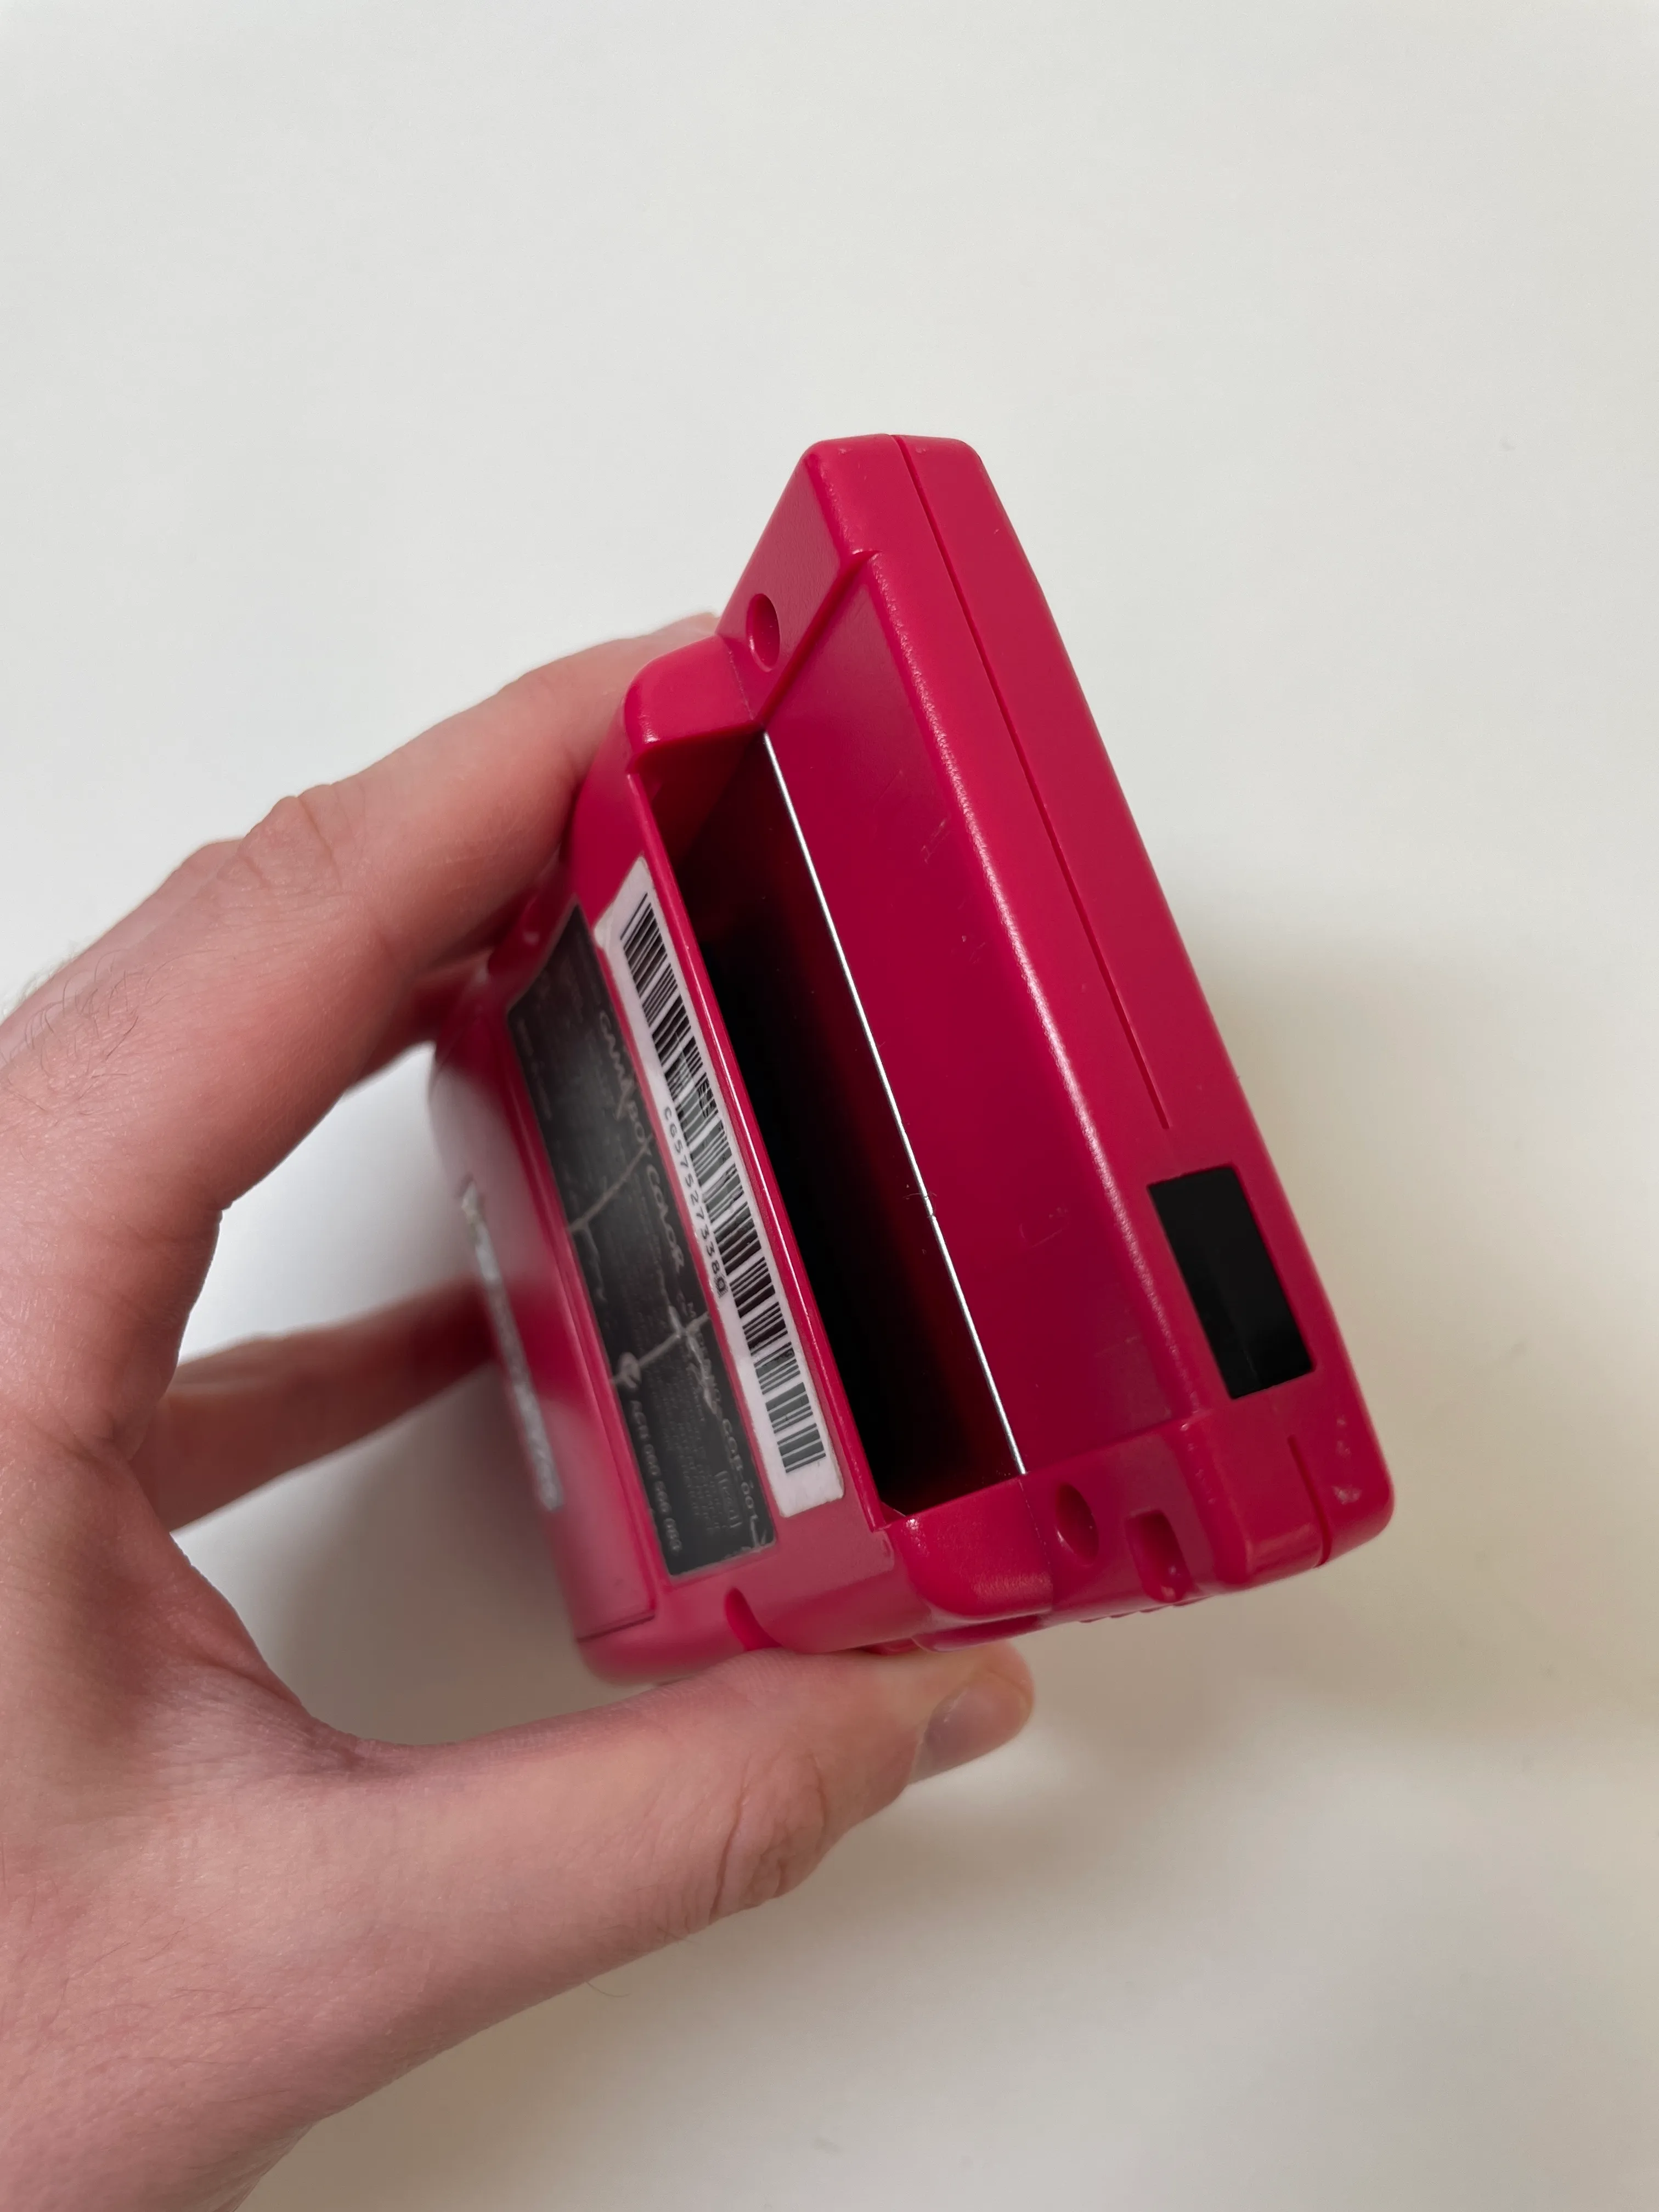 Game Boy Color Handheld Gaming System in Red media